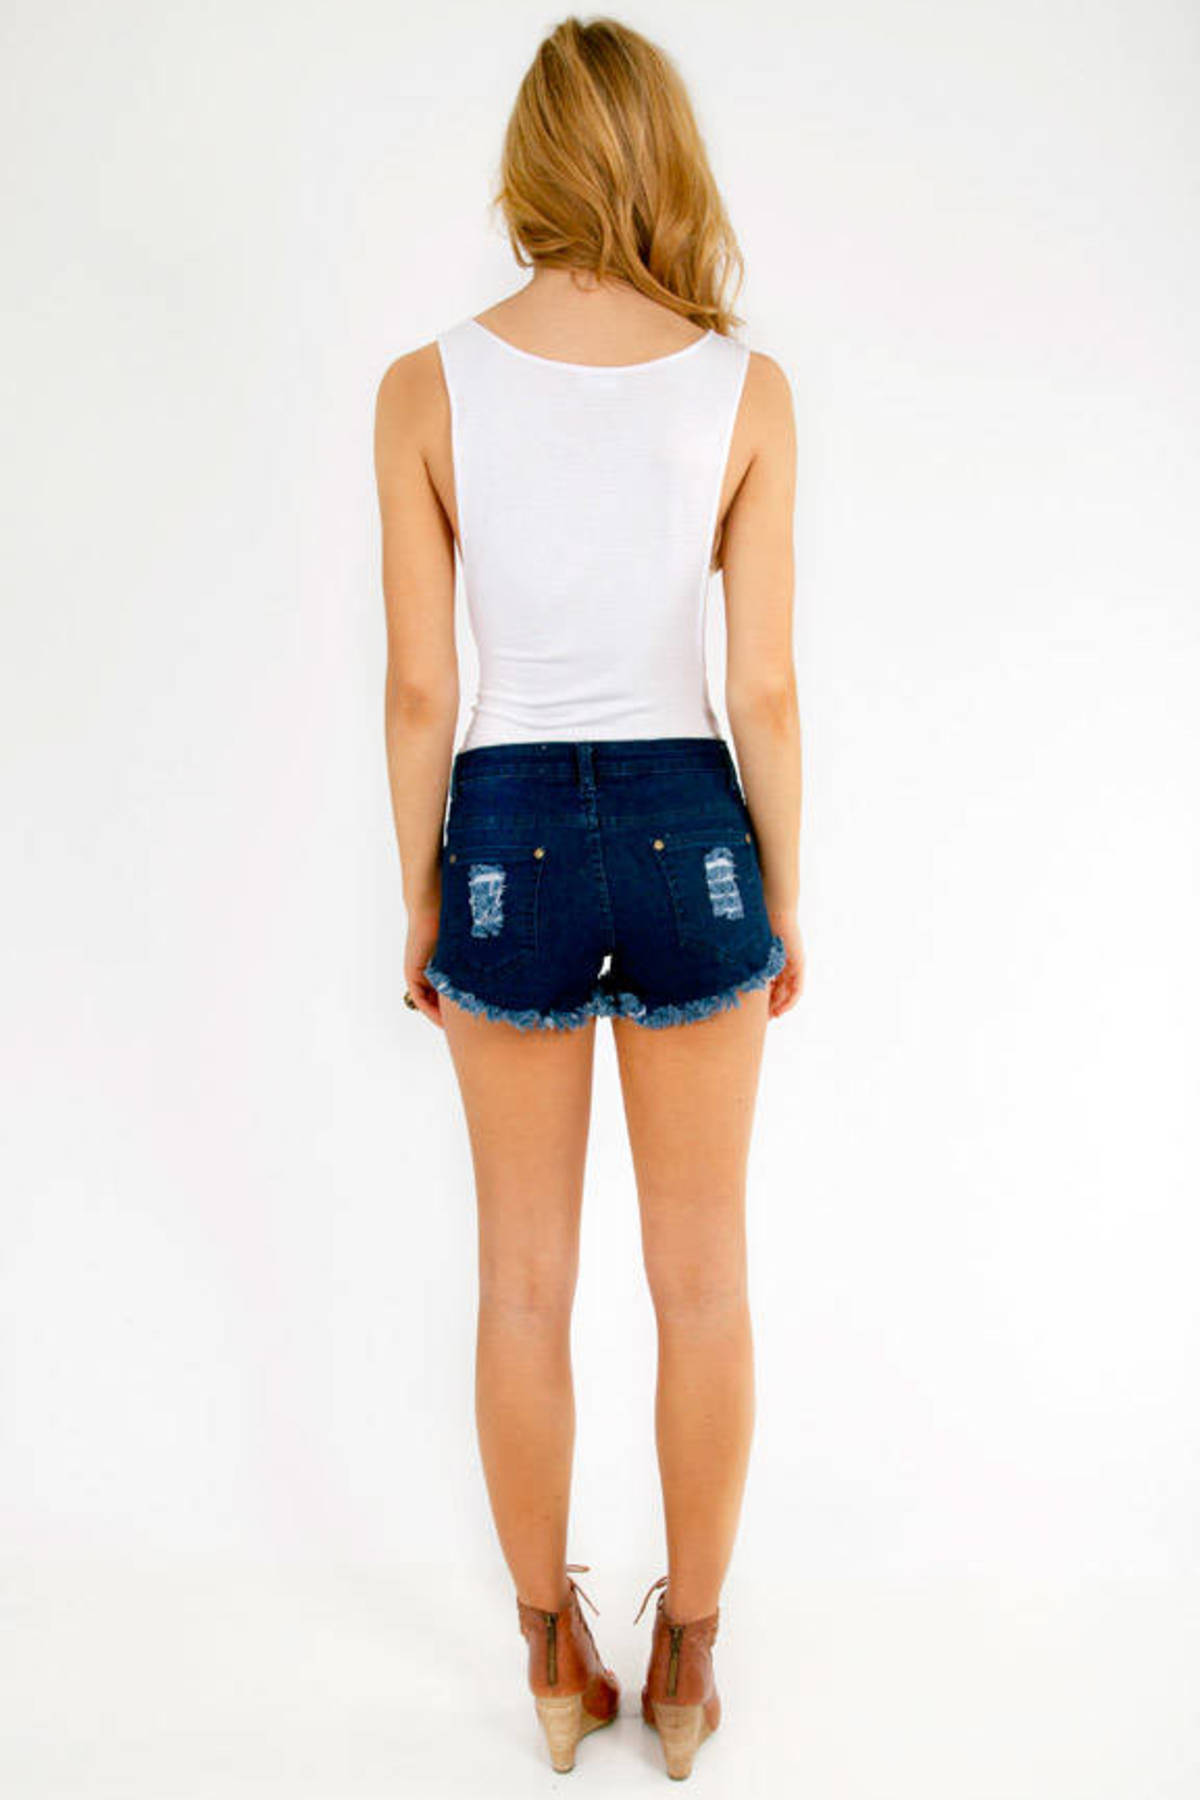 Americana Stud Shorts in Blue - $25 | Tobi US